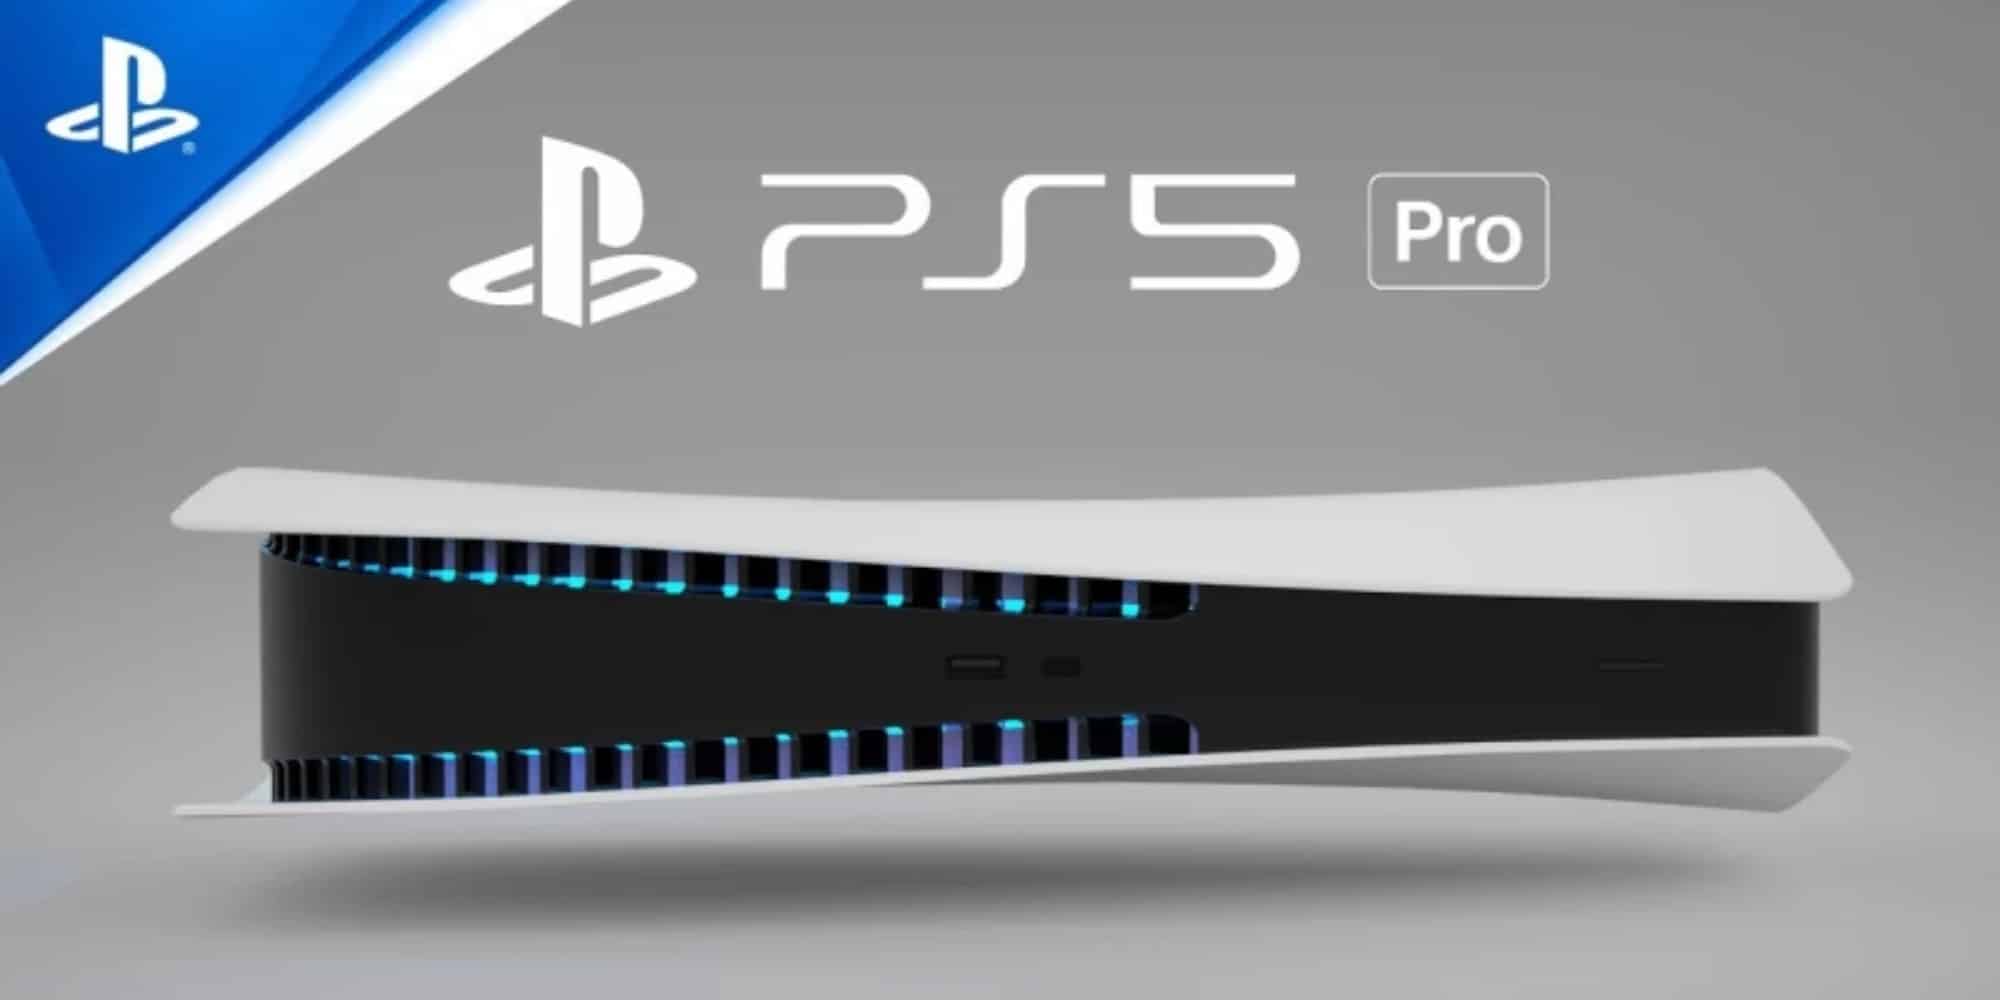 ps5 pro - PS5 Pro: Η Sony πρακτικά το επιβεβαίωσε! Νέες εξελίξεις